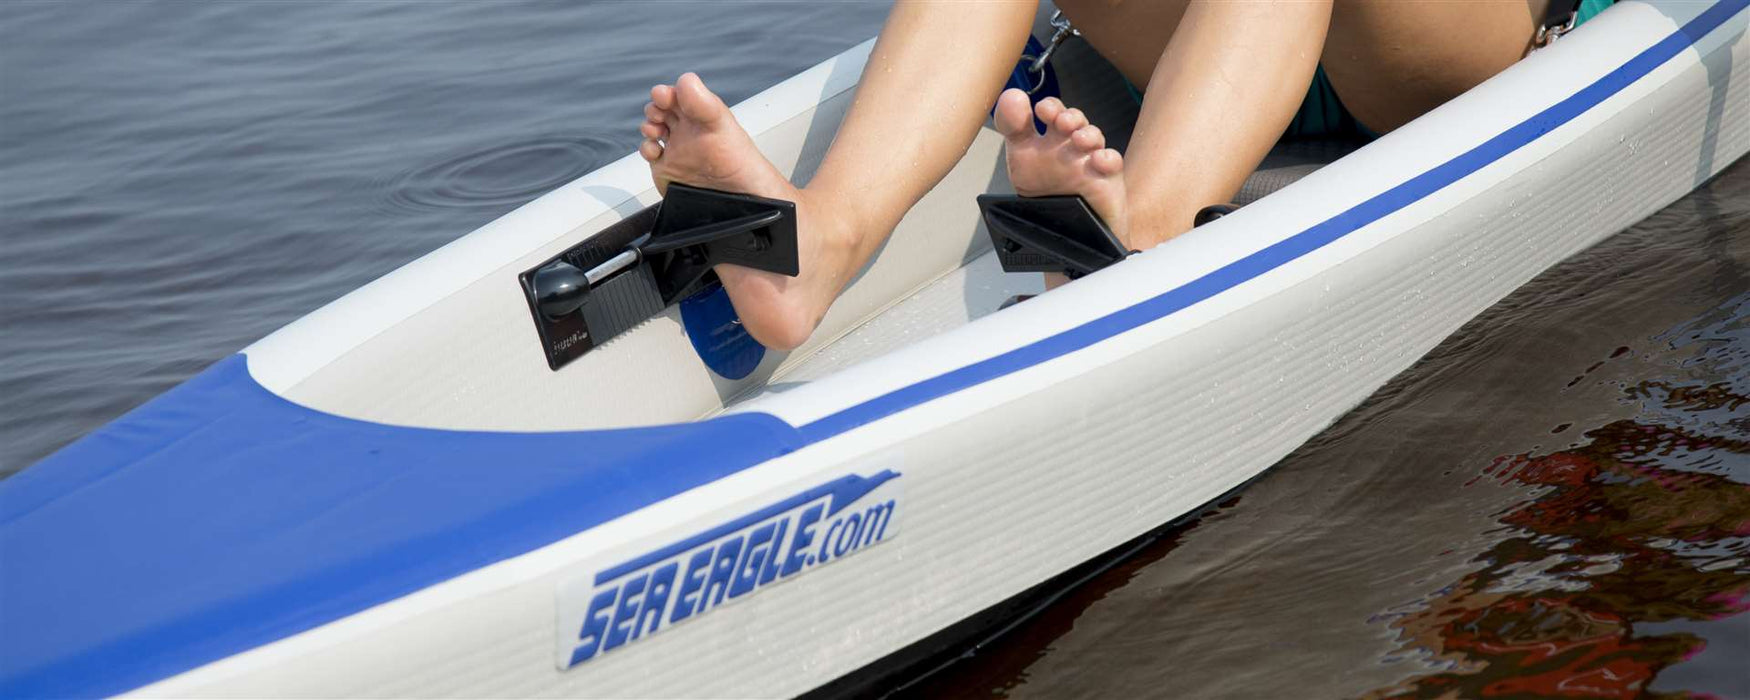 RazorLite™ 393rl Inflatable Kayak Pro Solo Package by SeaEagle 393RLK_P SeaEagle